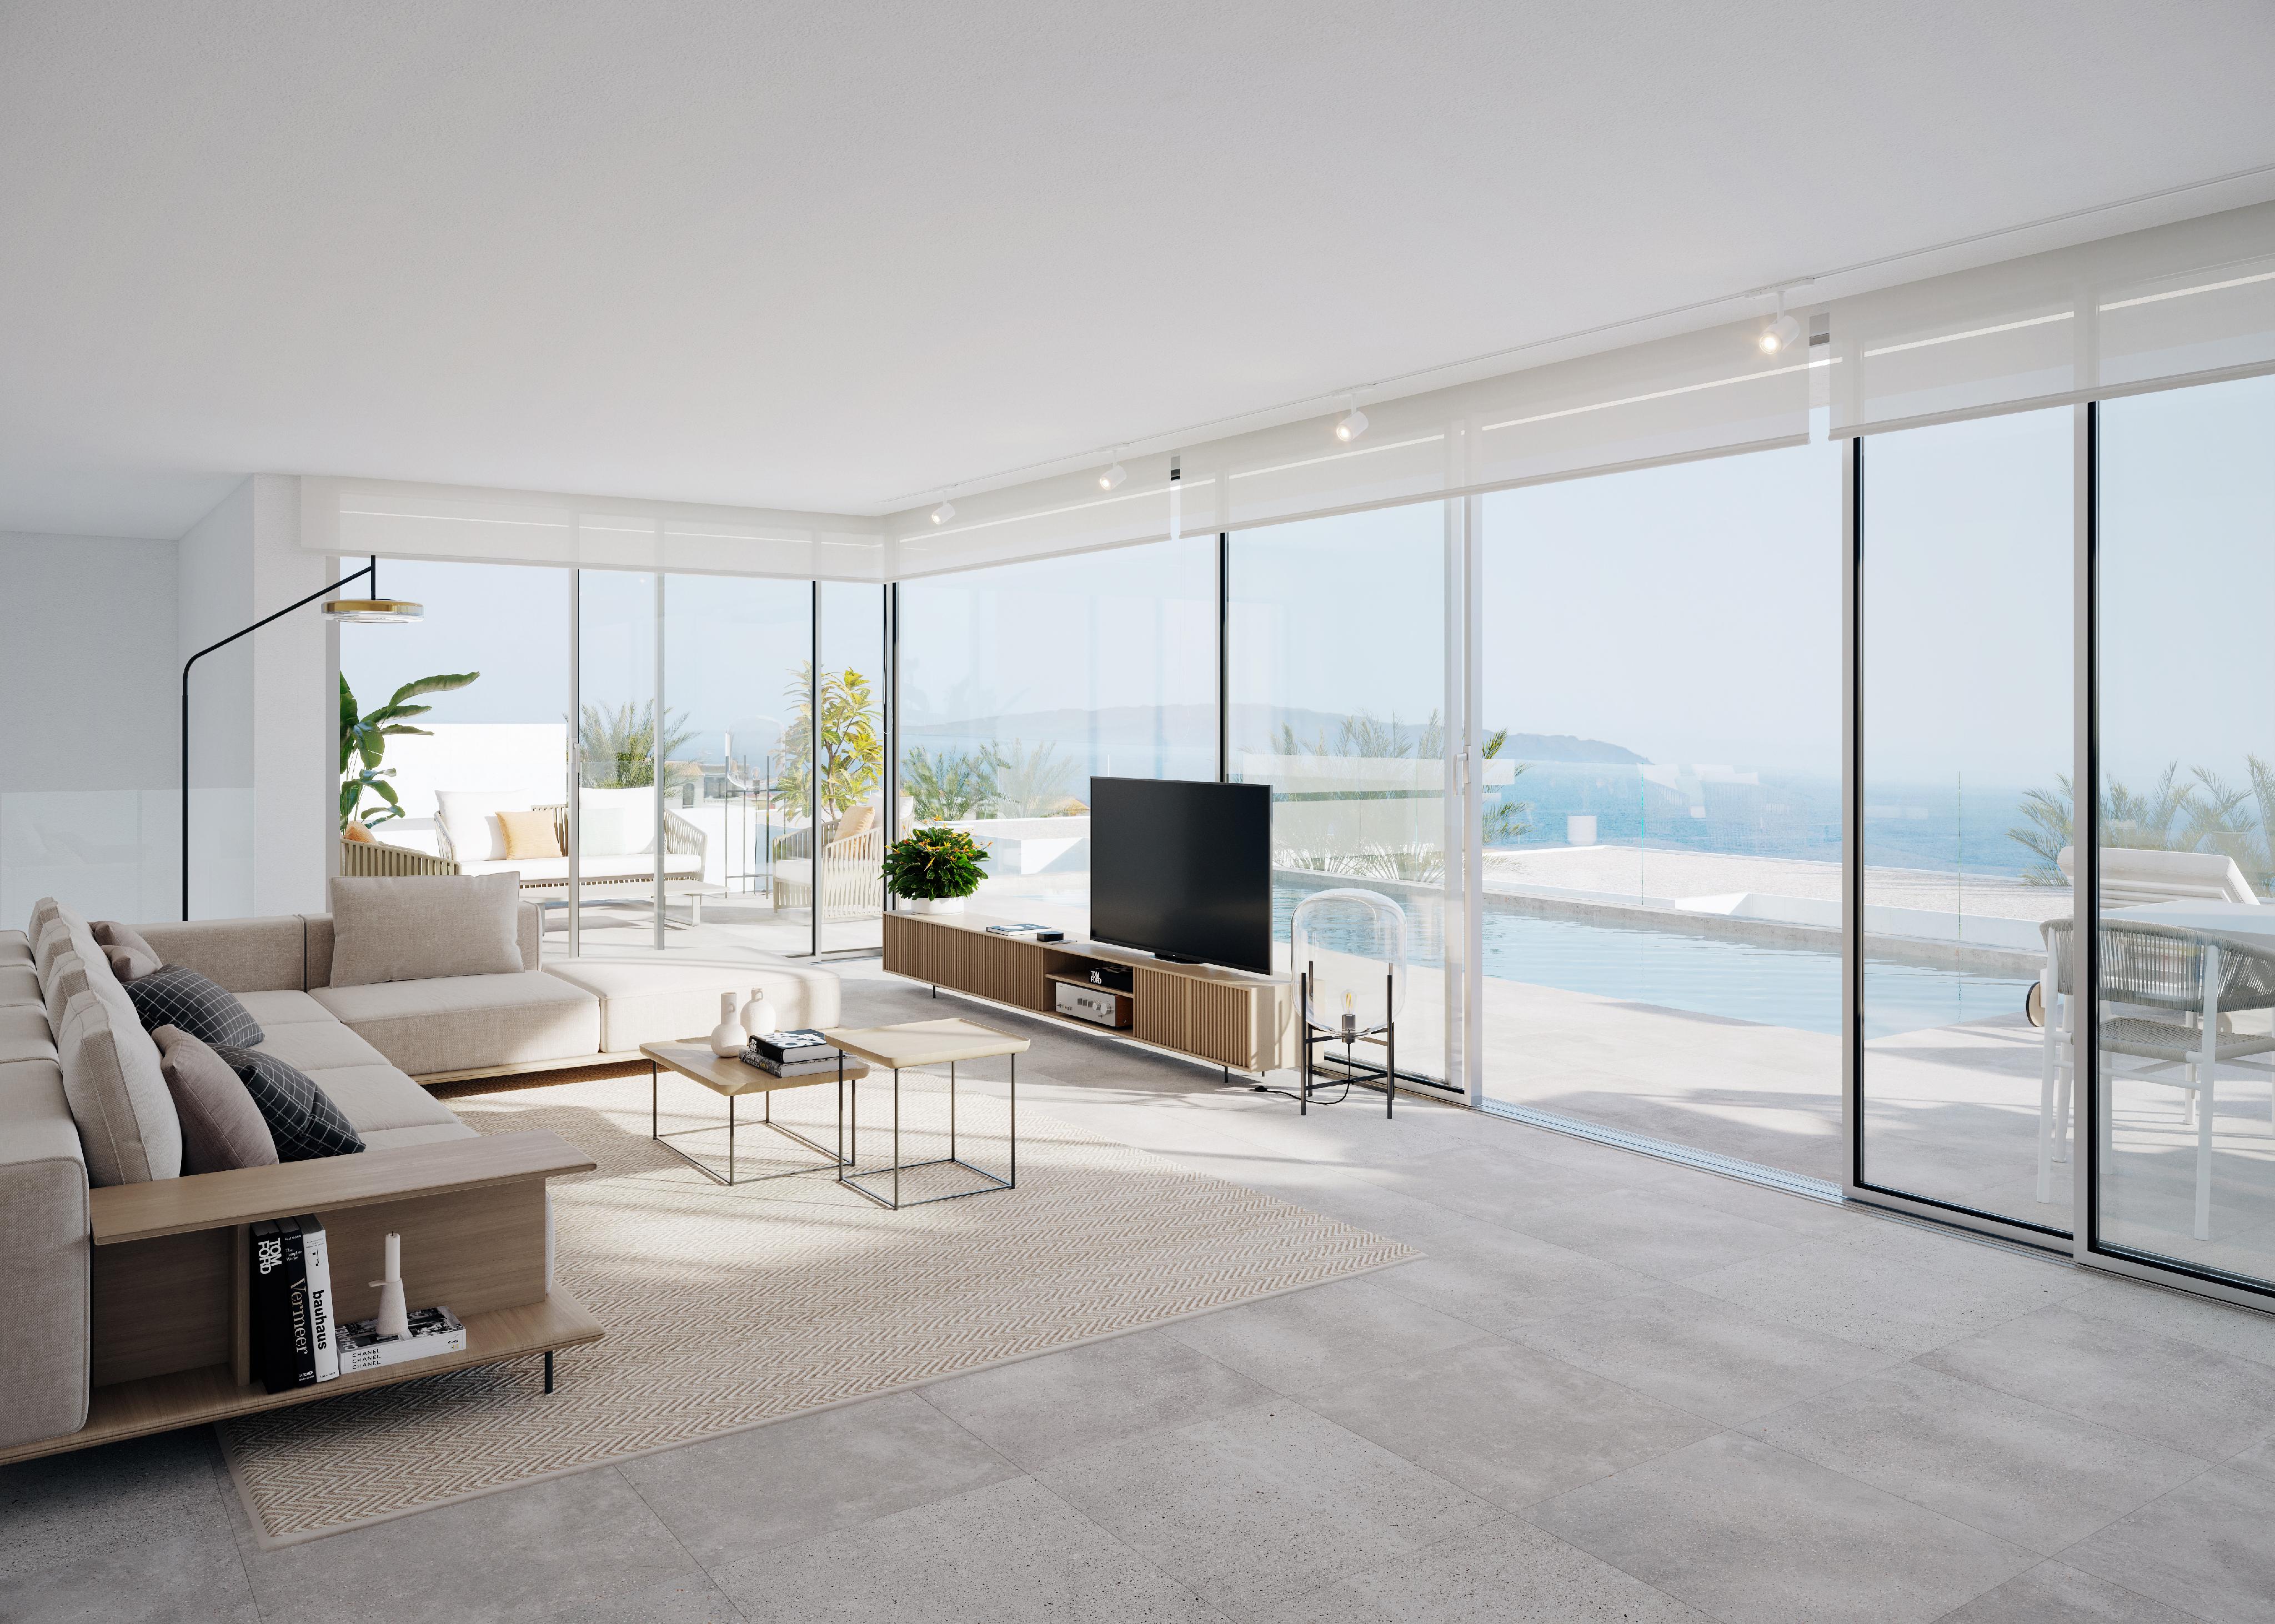 Sybaris Premium Villas: New project of villas with three floors